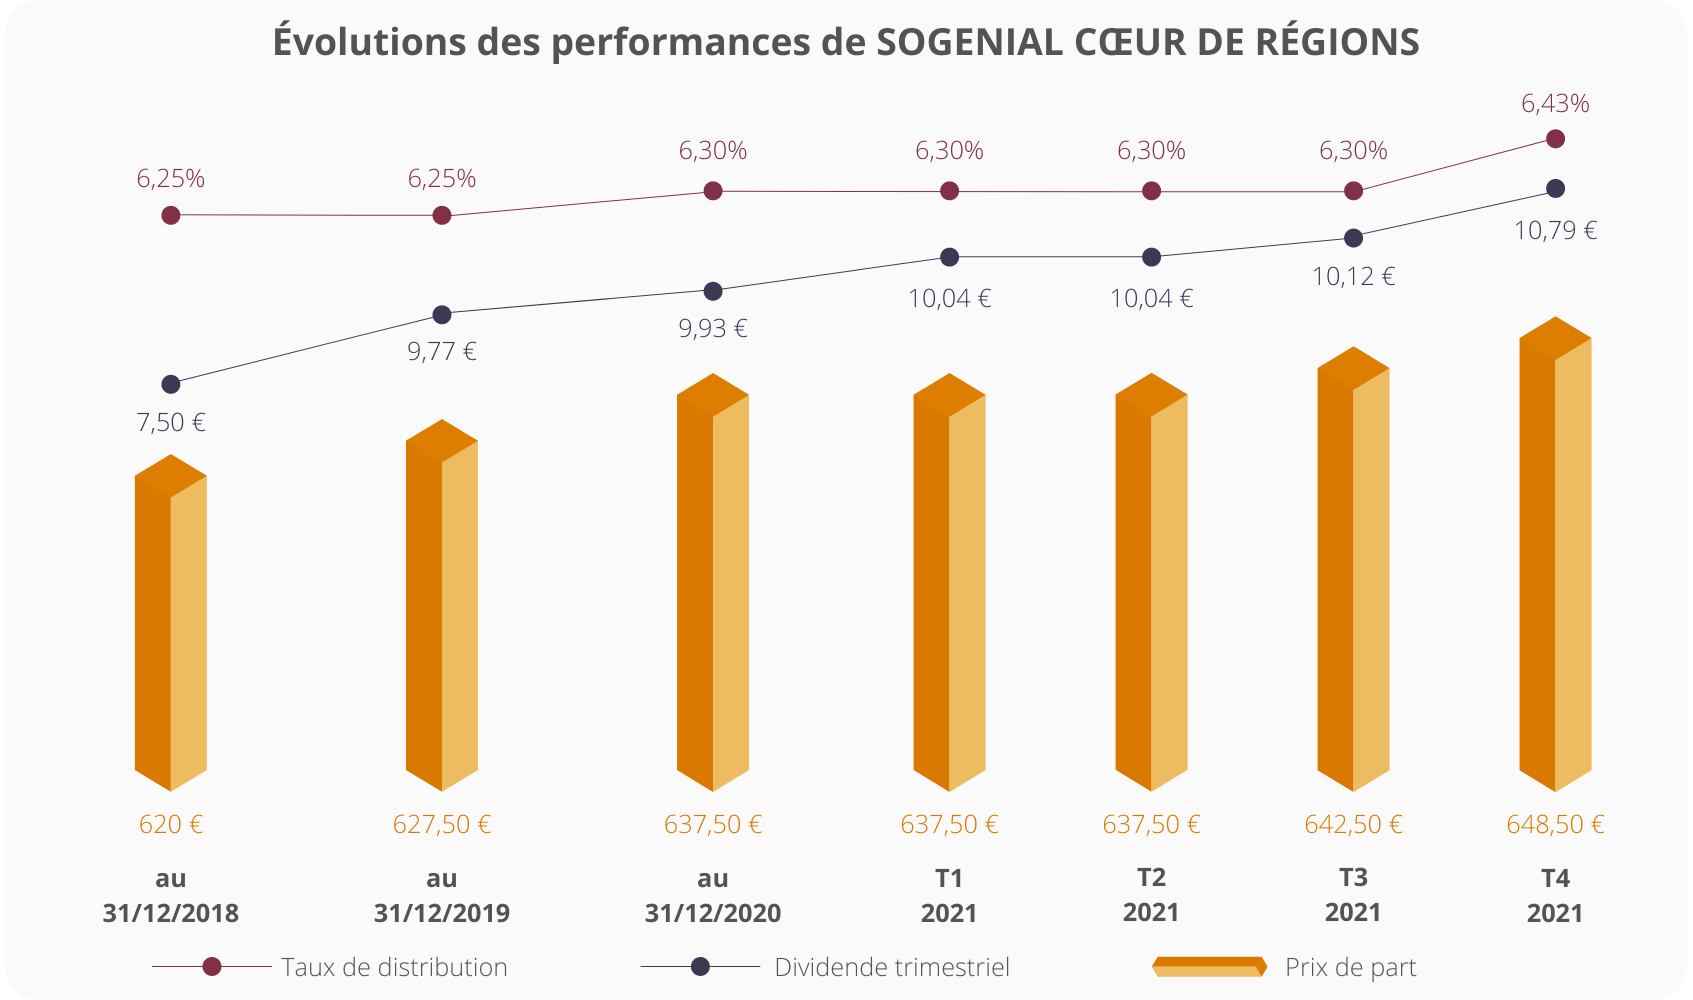 evolutions-des-performances-sogenial-coeur-de-regions-coconseils.png